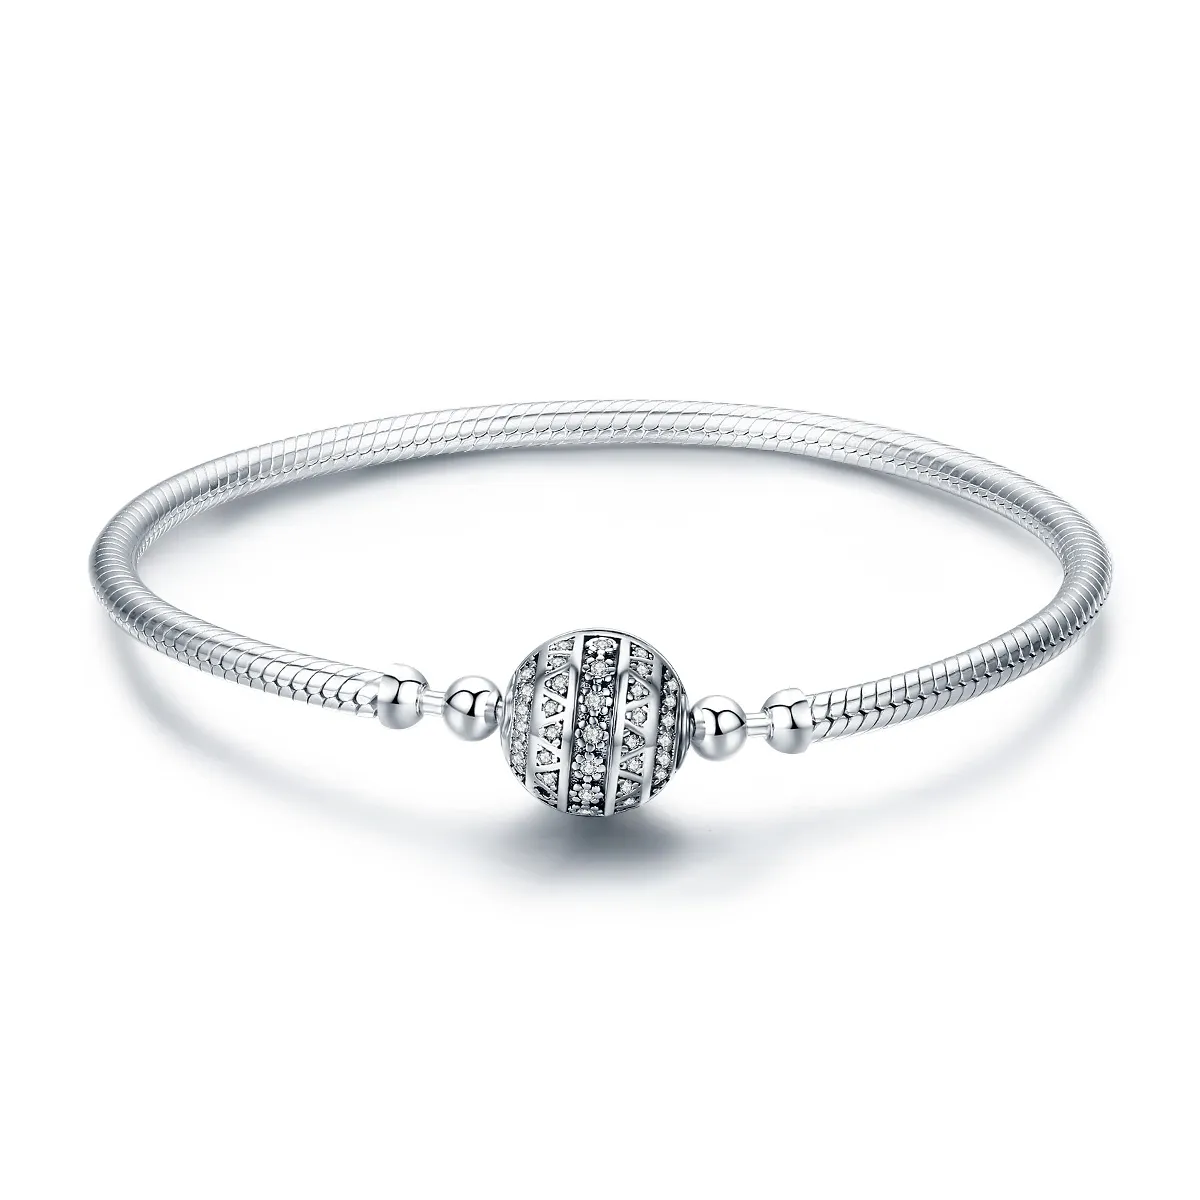 Pandora Style Silver Delicate Life Chain Bracelet - SCB062